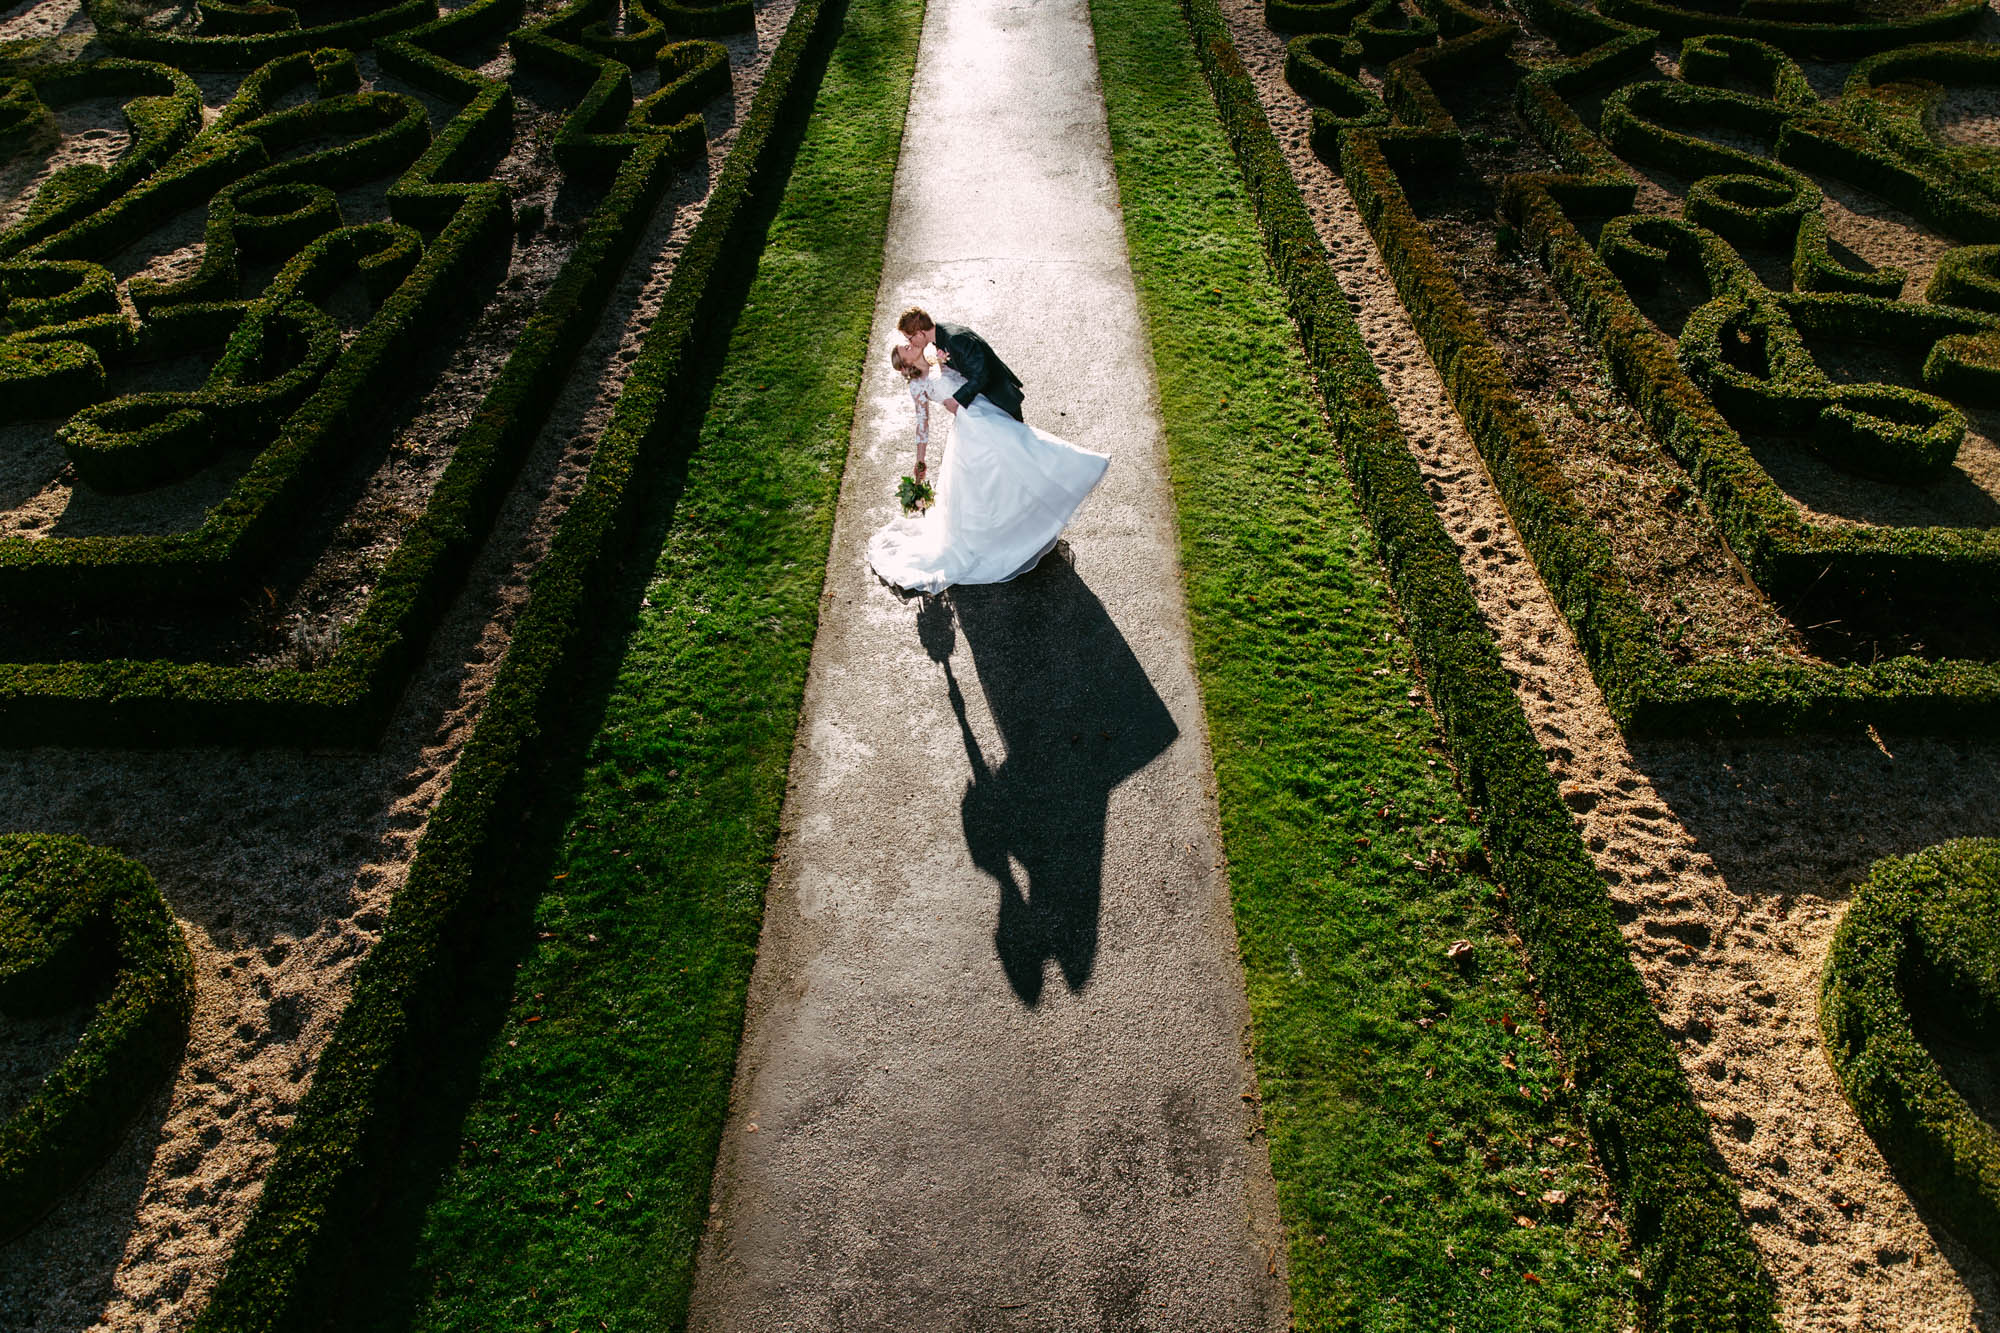 A bride in an A-line wedding dress and groom walk through a maze.